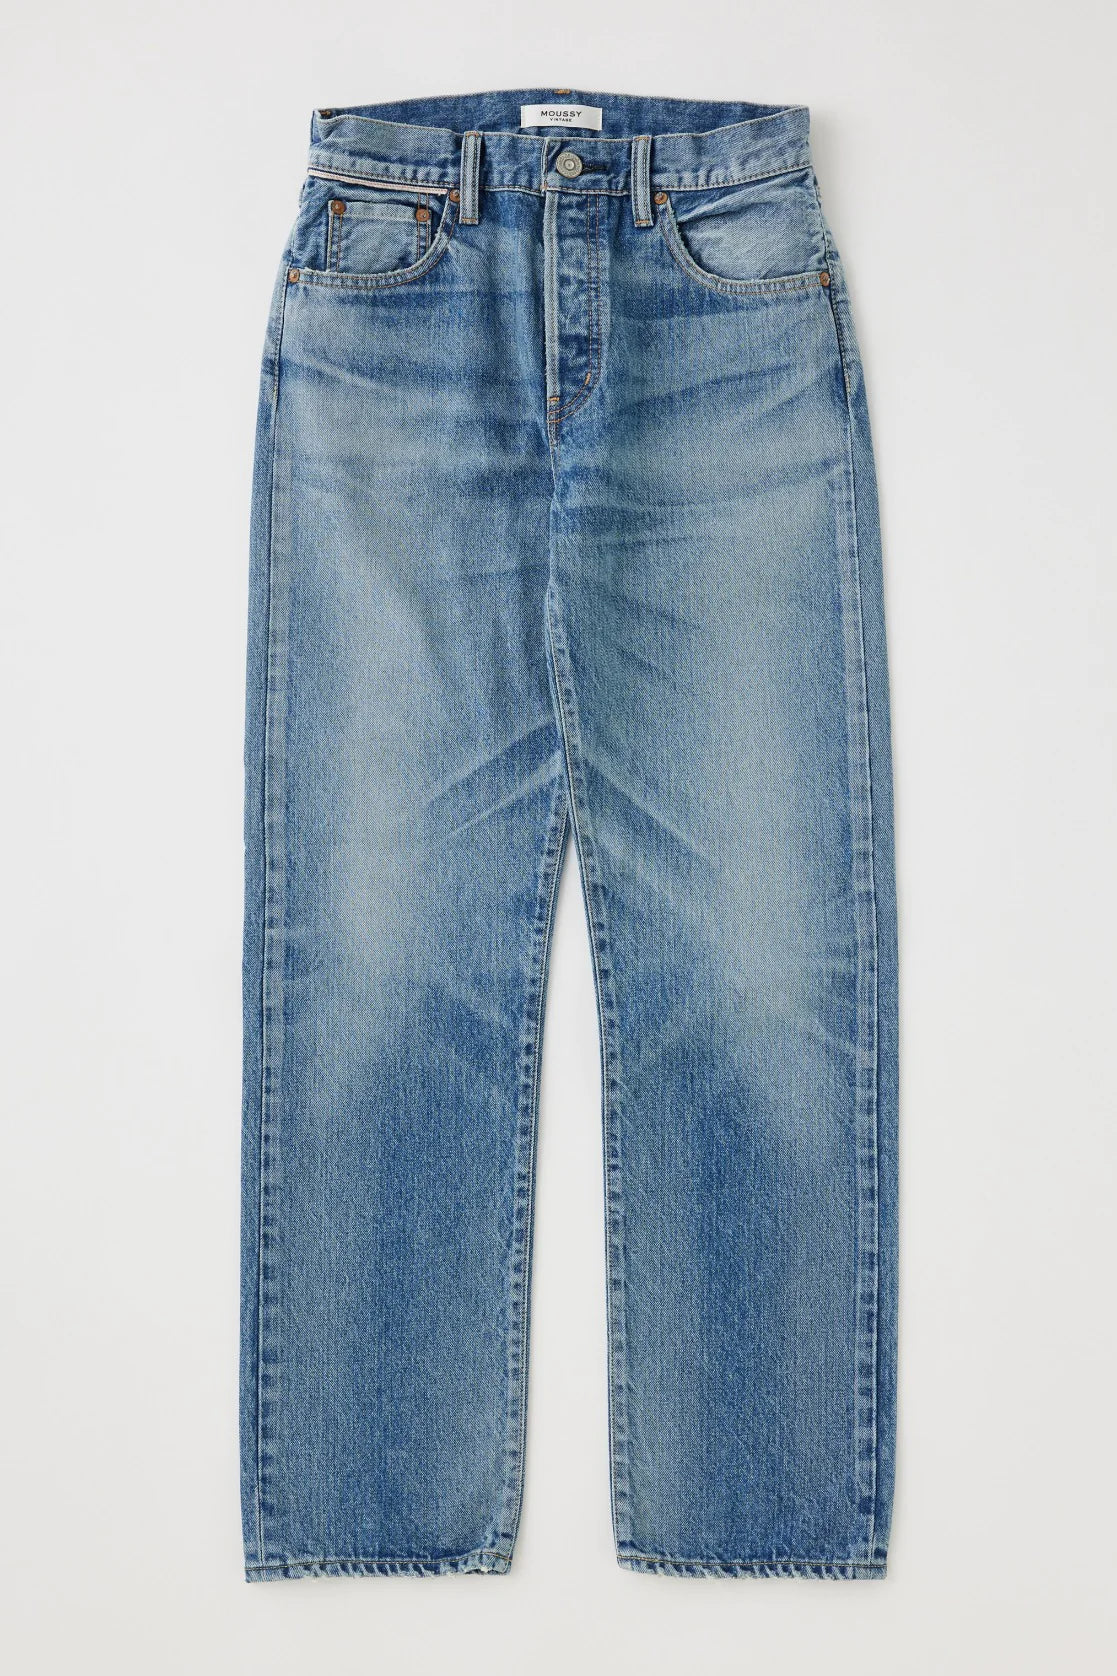 Moussy Vintage Graceland Straight Jeans